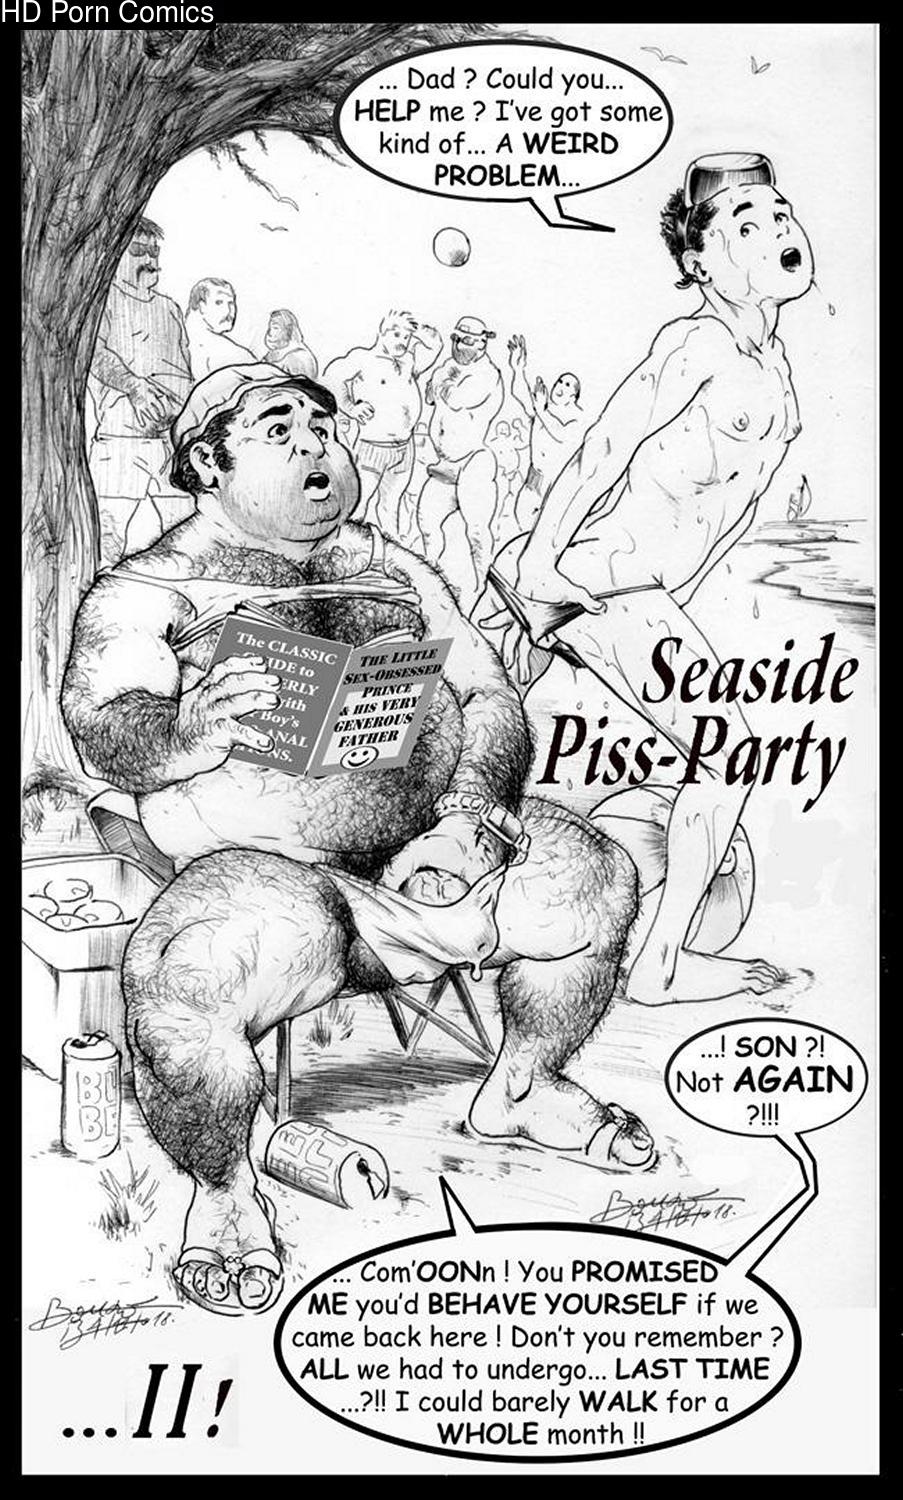 Pee Cartoon Porn - Seaside Piss-Party 2 comic porn | HD Porn Comics